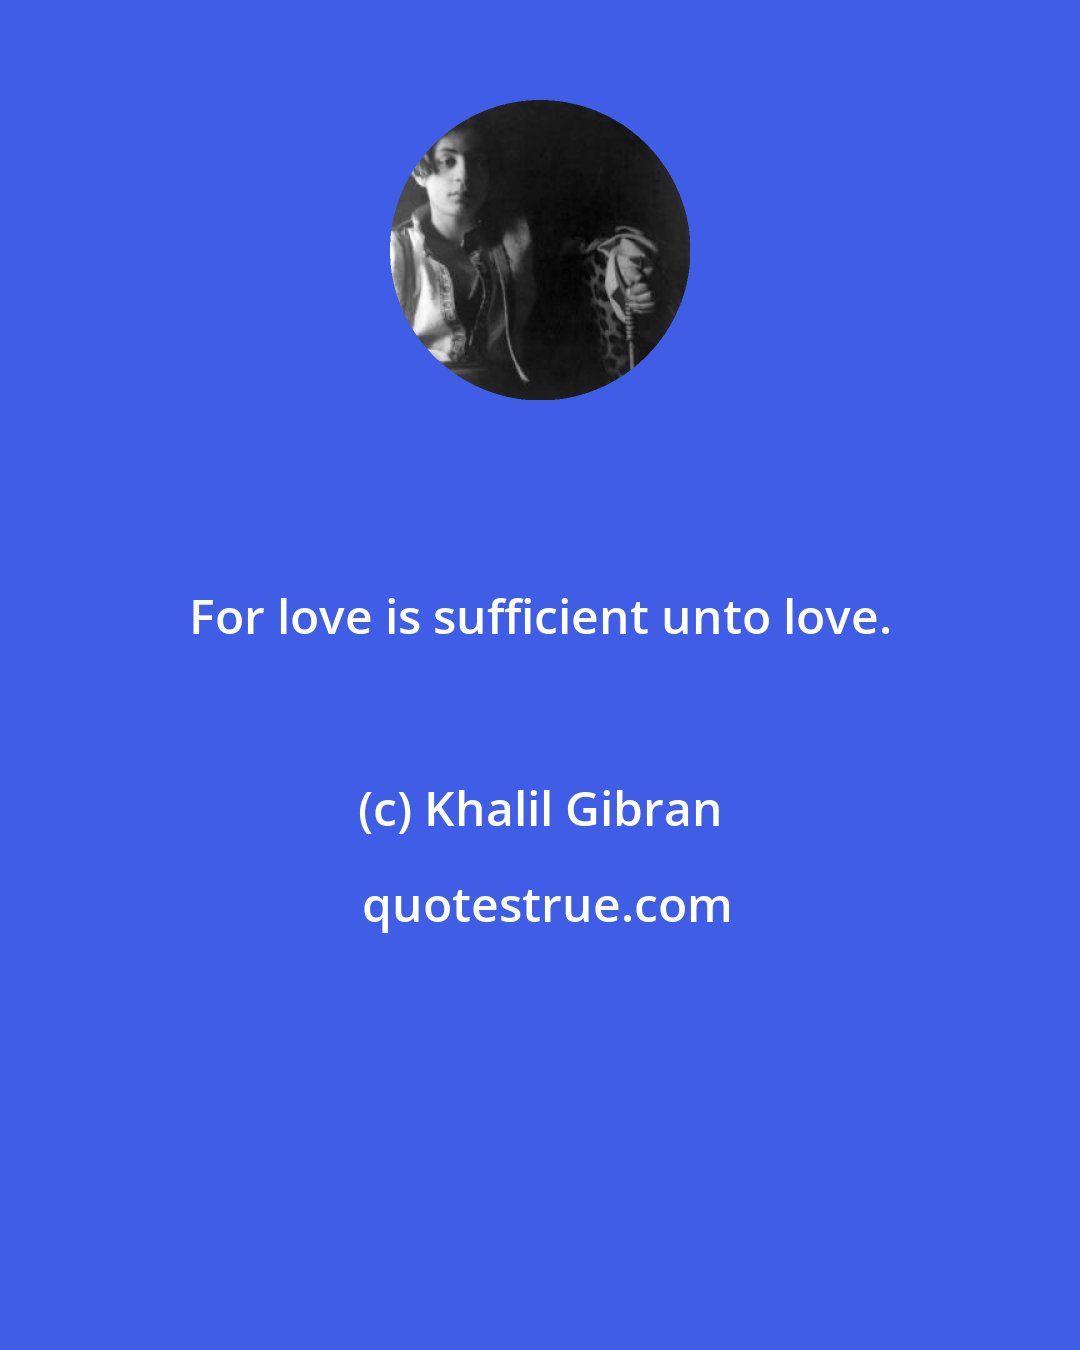 Khalil Gibran: For love is sufficient unto love.